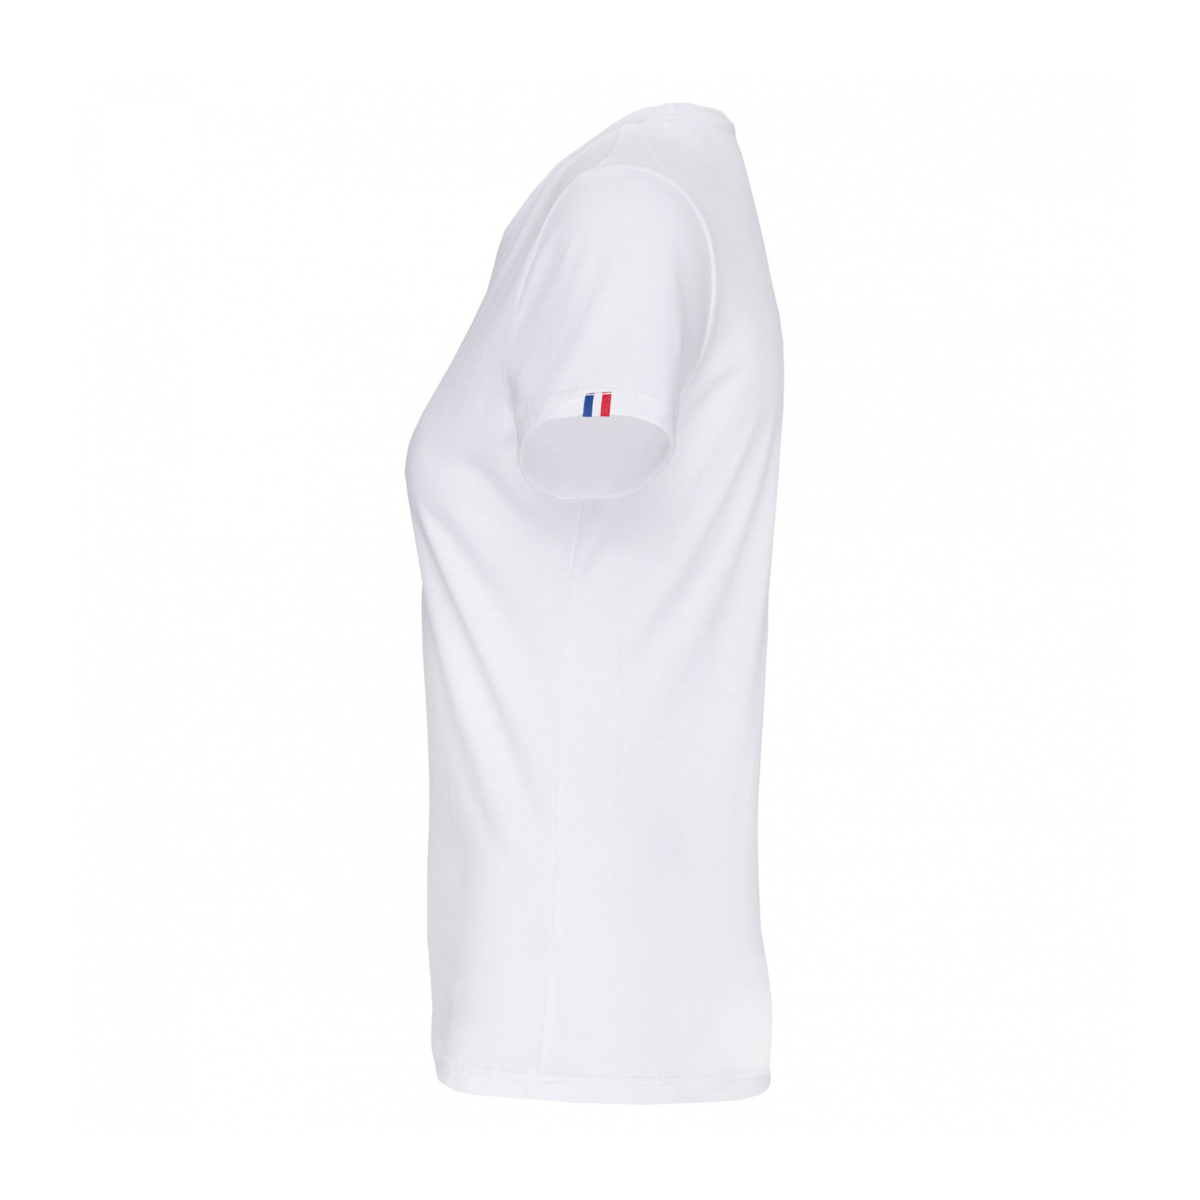 🇫🇷 Tee-shirt France femme pelote basque